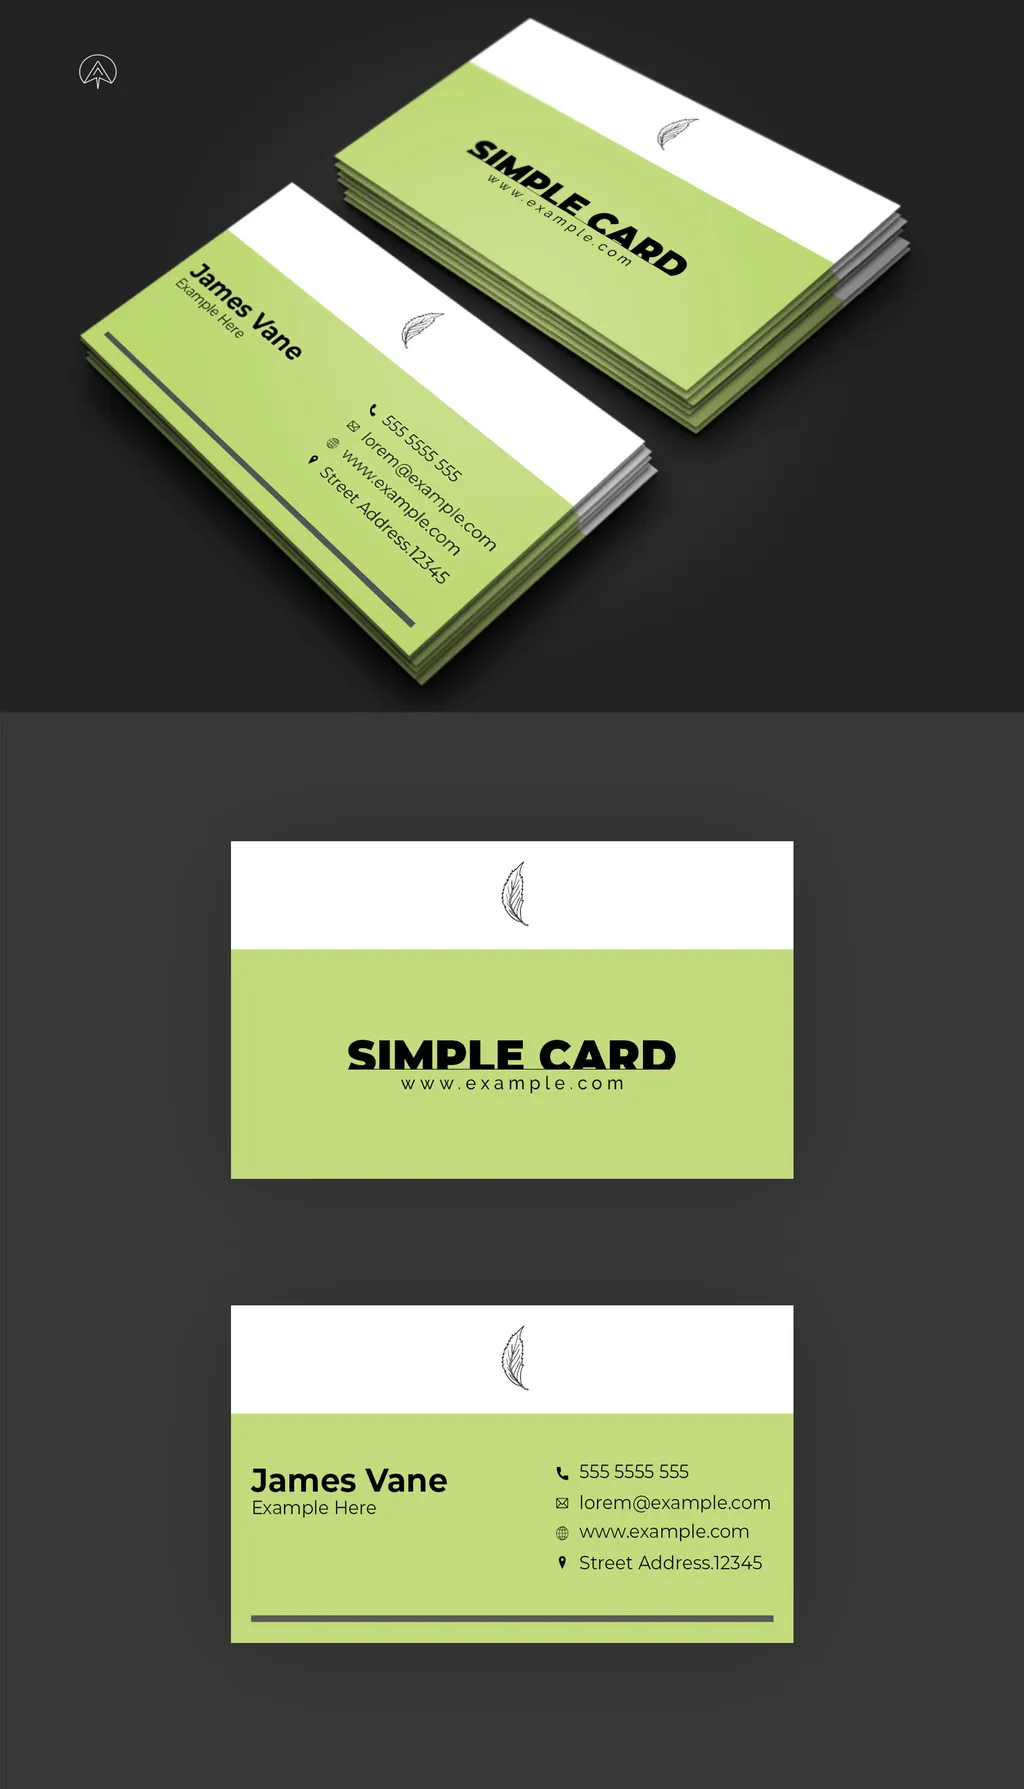 Adobestock - Simple Card 721786329